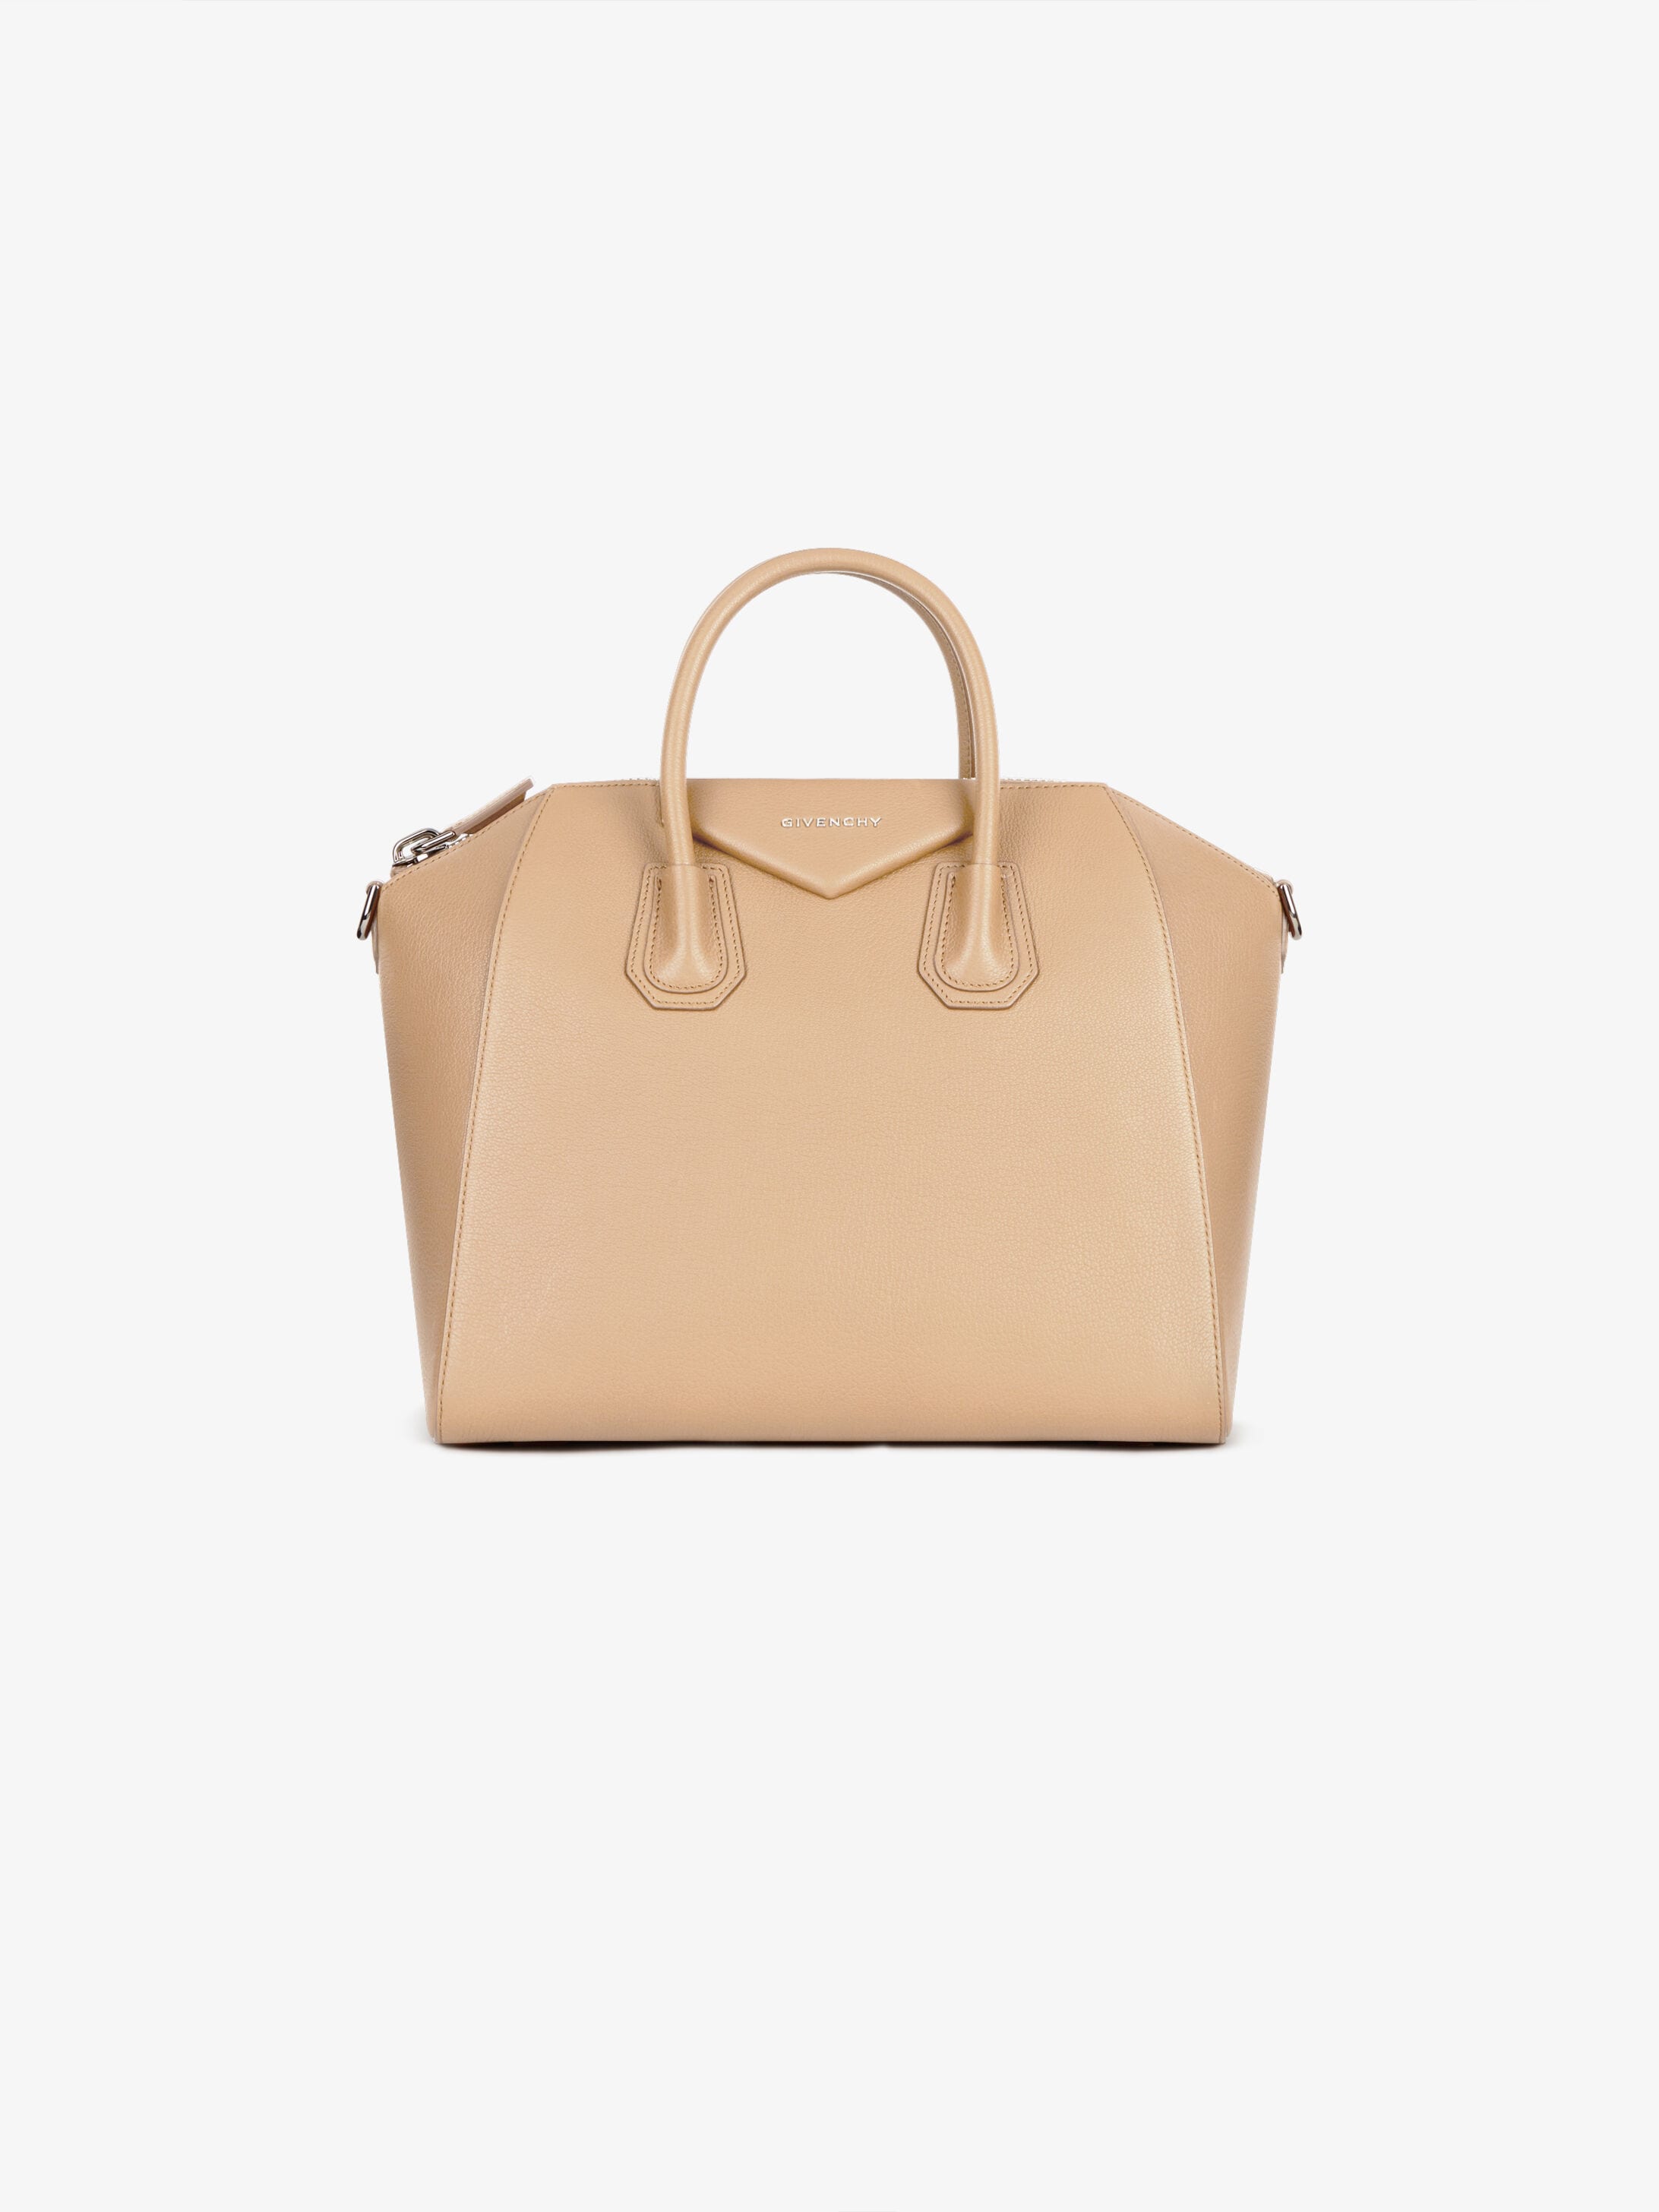 givenchy handbags canada 361623